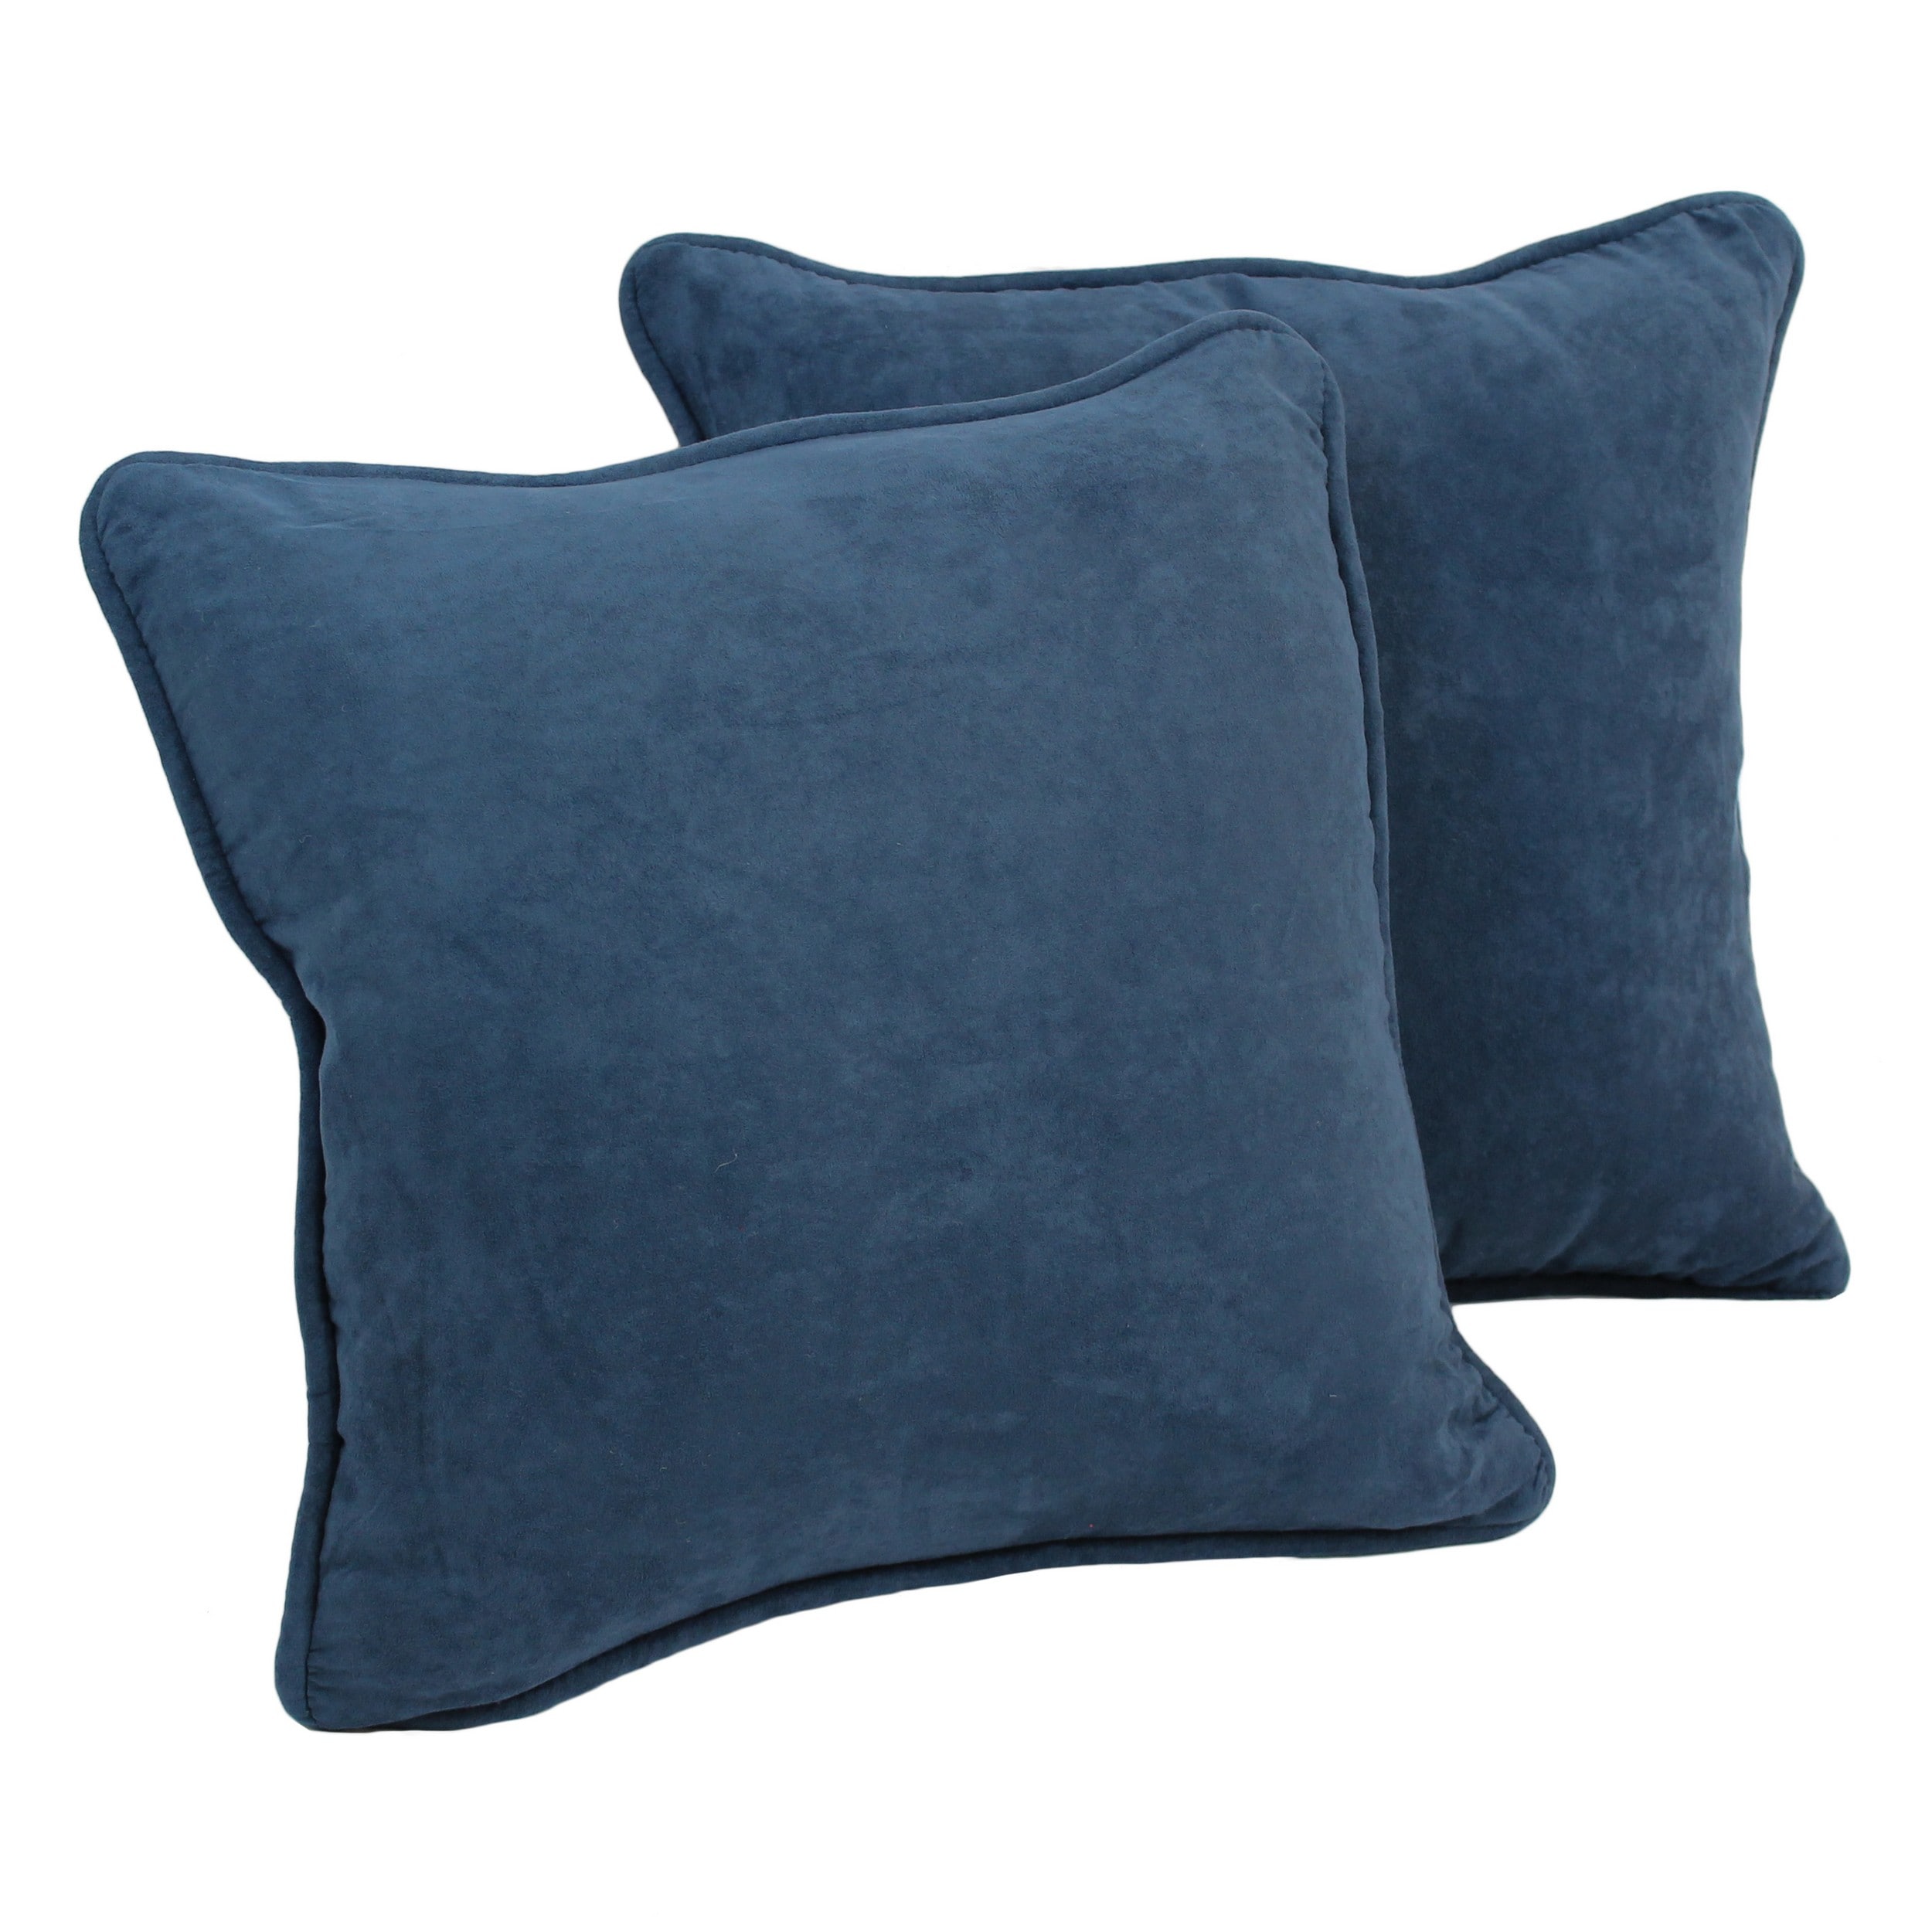 Indigo Washable Microsuede Pillows